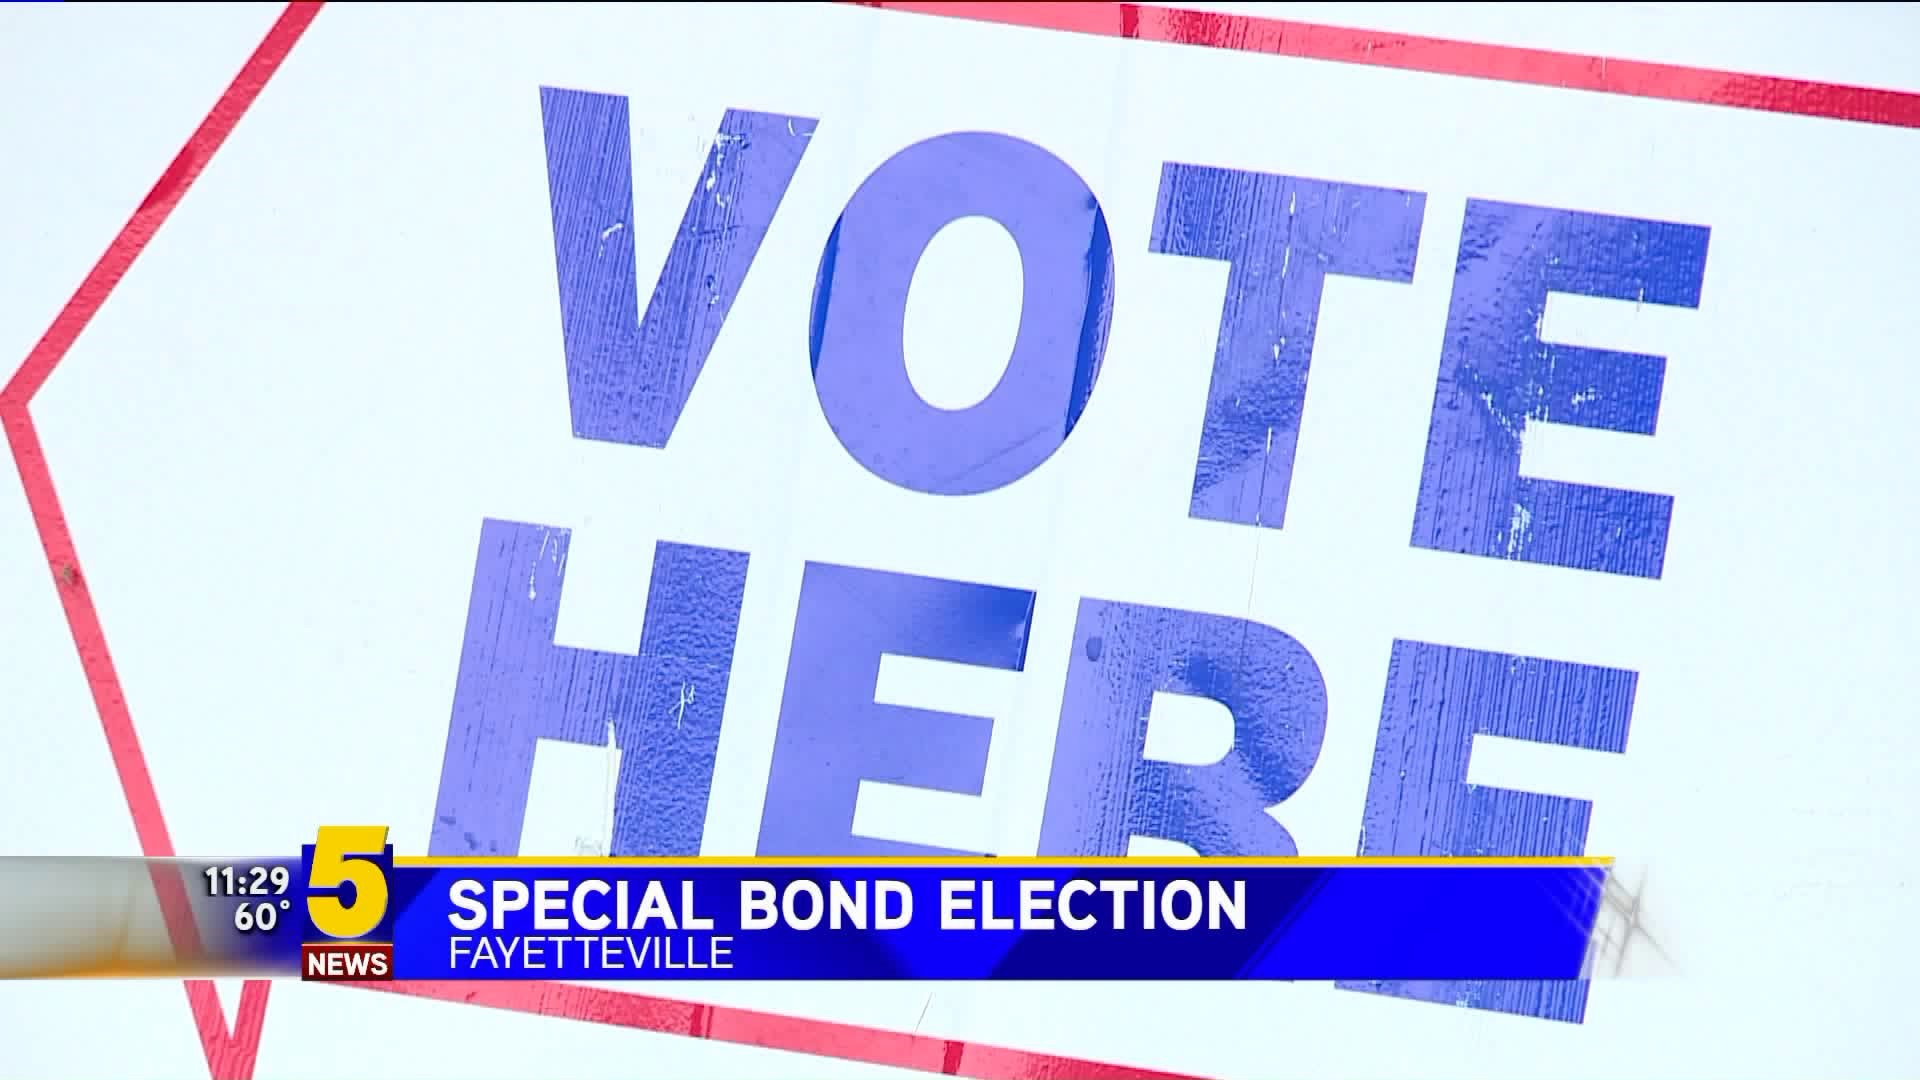 Fayetteville Special Bond Election